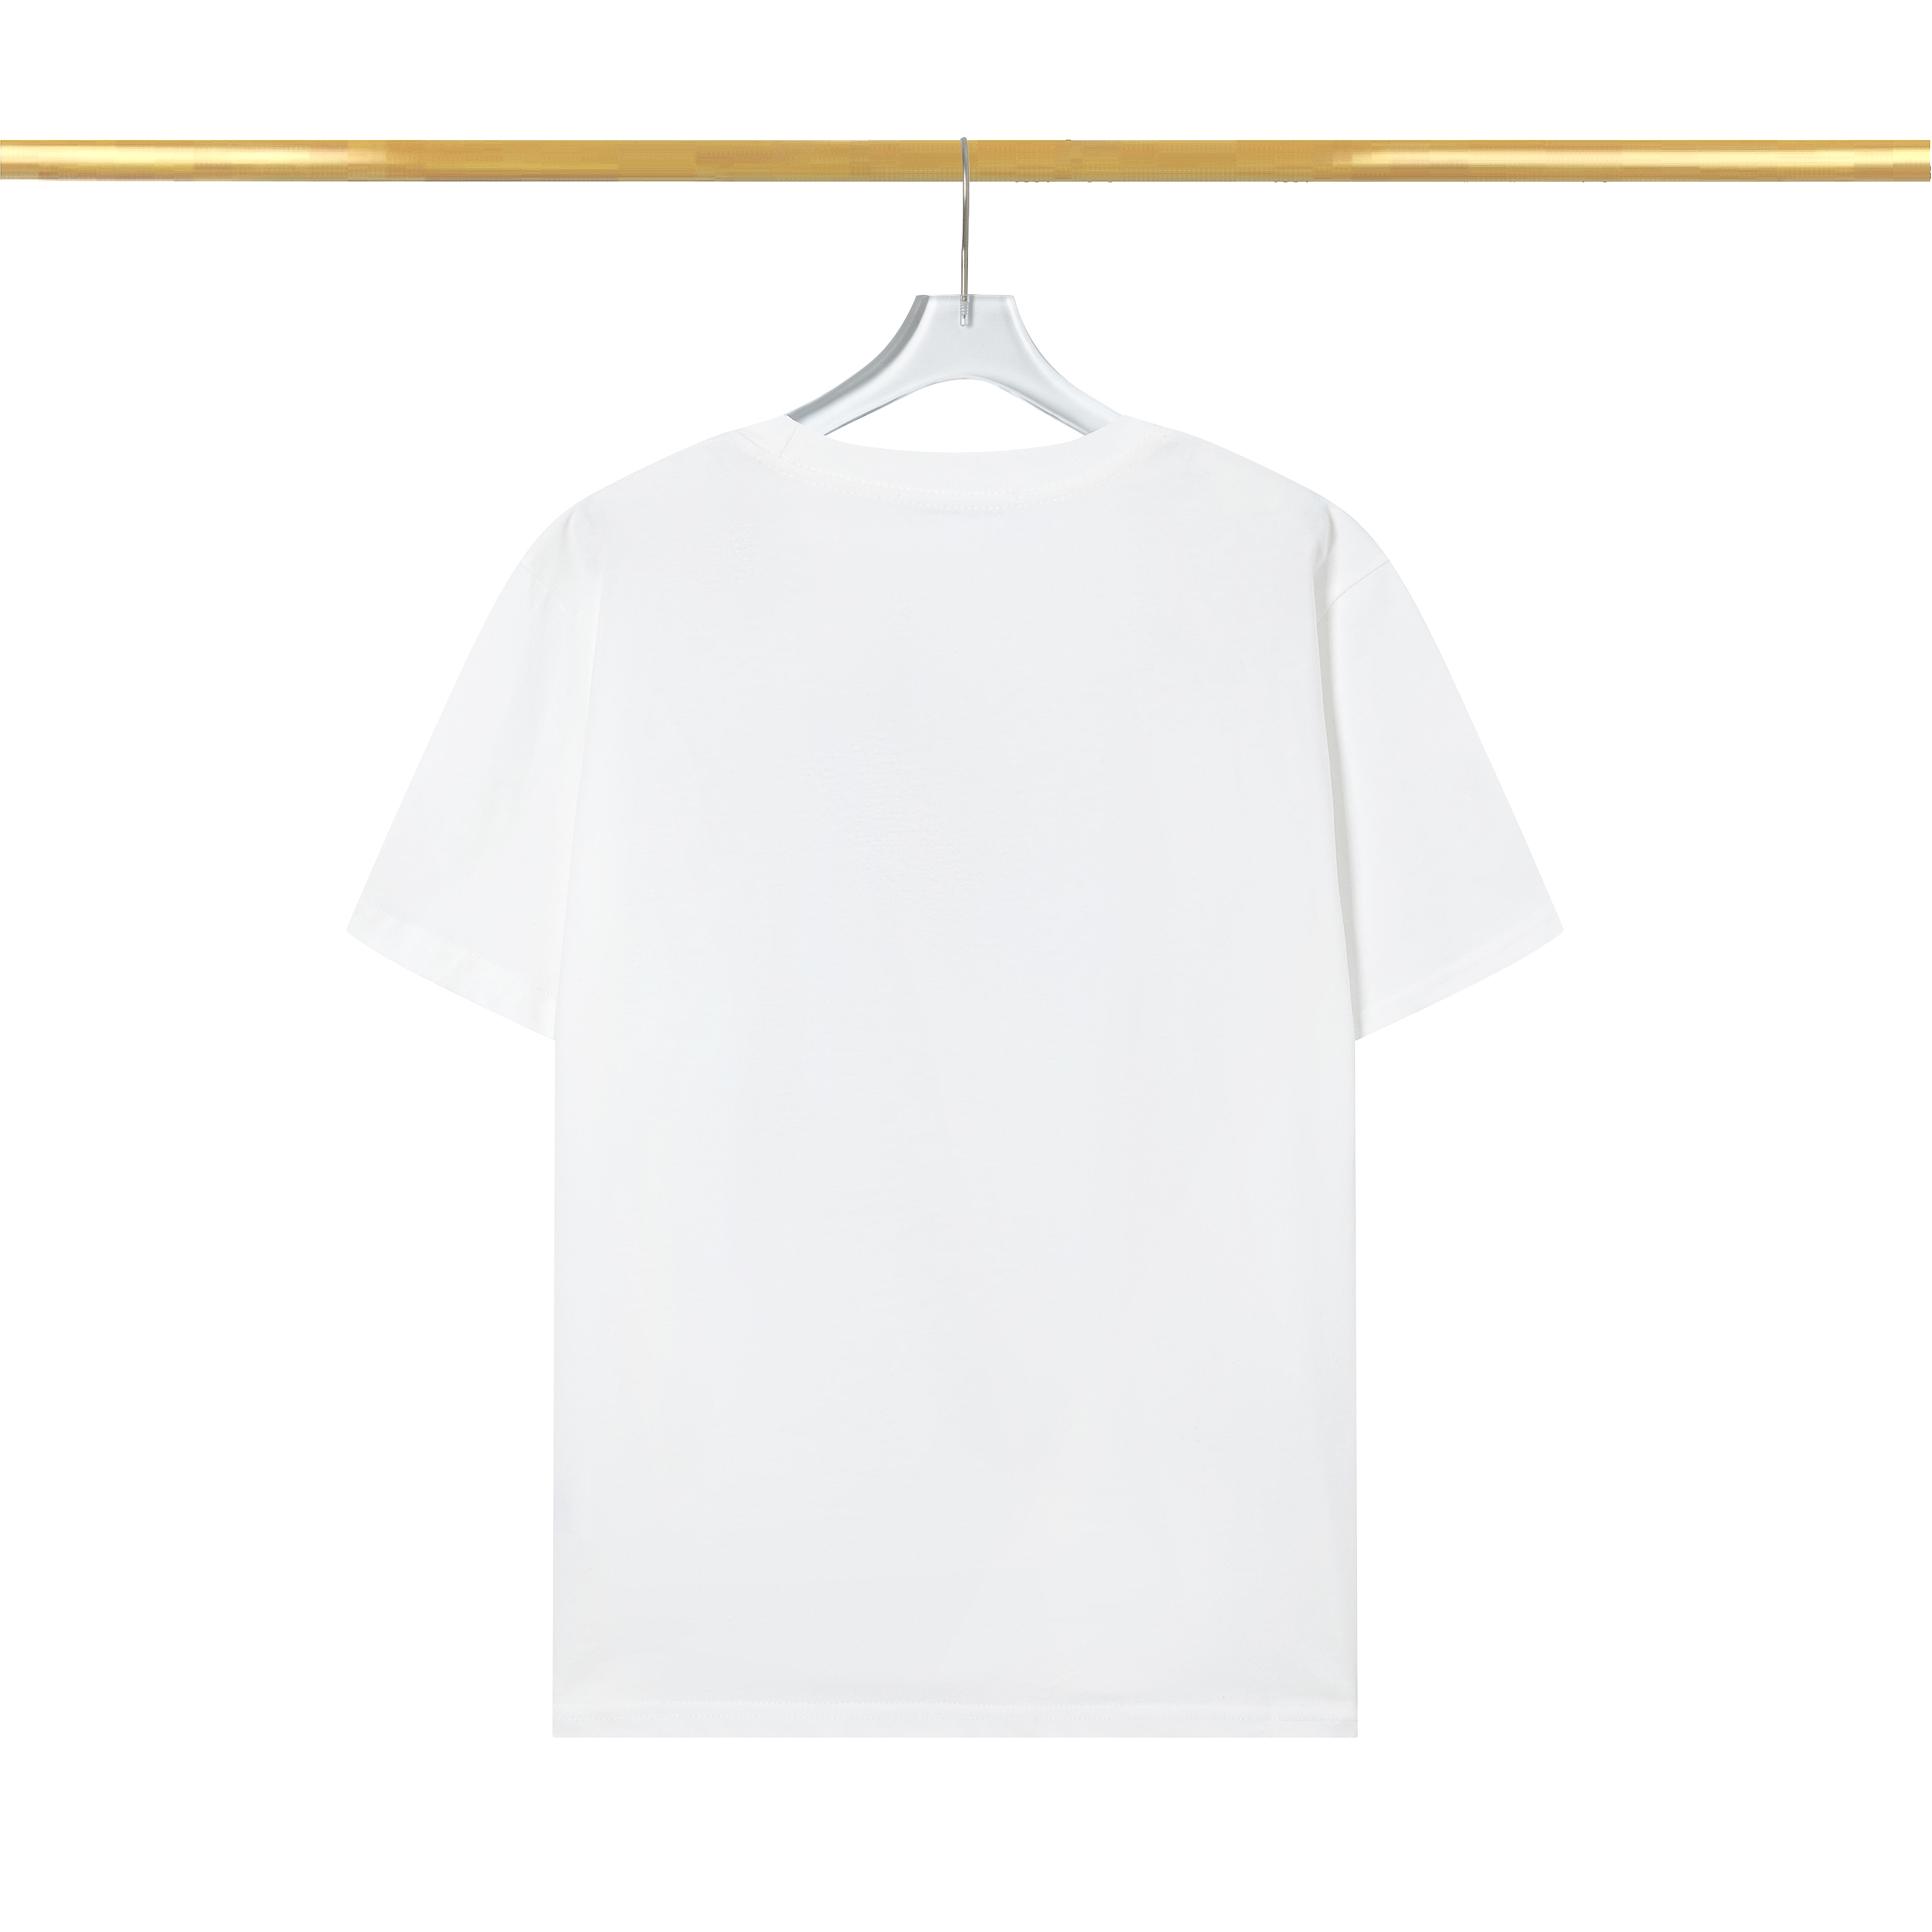 Cotton Men 's Be All-Match New Black White 인쇄 편지 여름 캐주얼 한 느슨한 짧은 소매 새로운 최고의 컬러 티셔츠